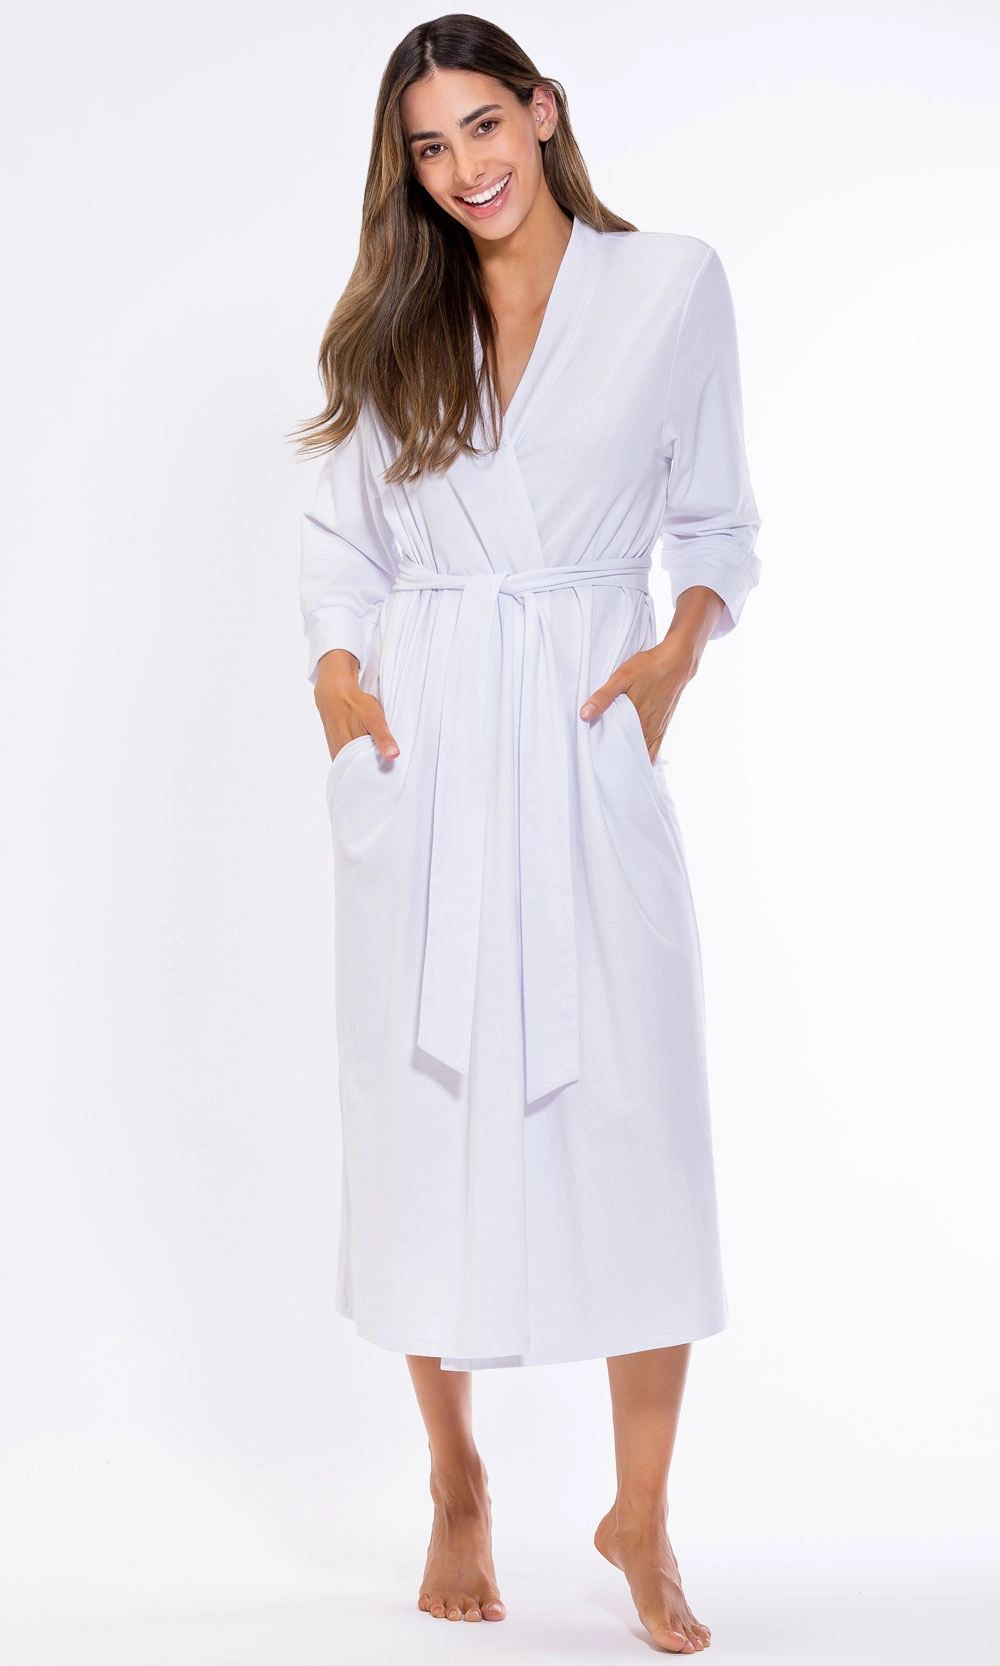 Women's :: Knit Robes :: Cotton White Knit Kimono Robe - Wholesale bathrobes,  Spa robes, Kids robes, Cotton robes, Spa Slippers, Wholesale Towels